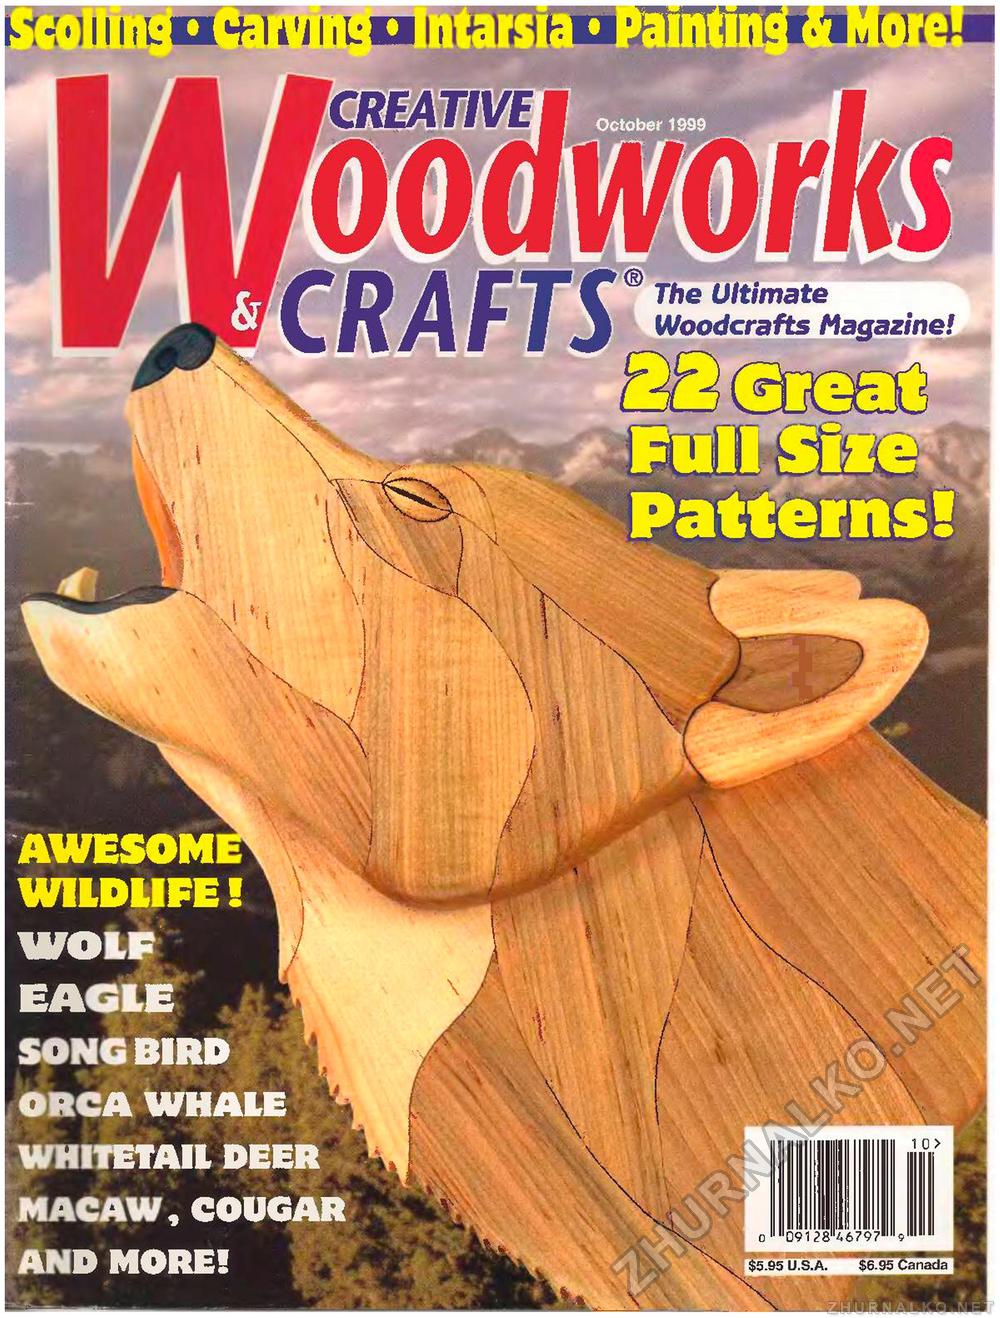 Creative Woodworks & crafts 1999-10,  1